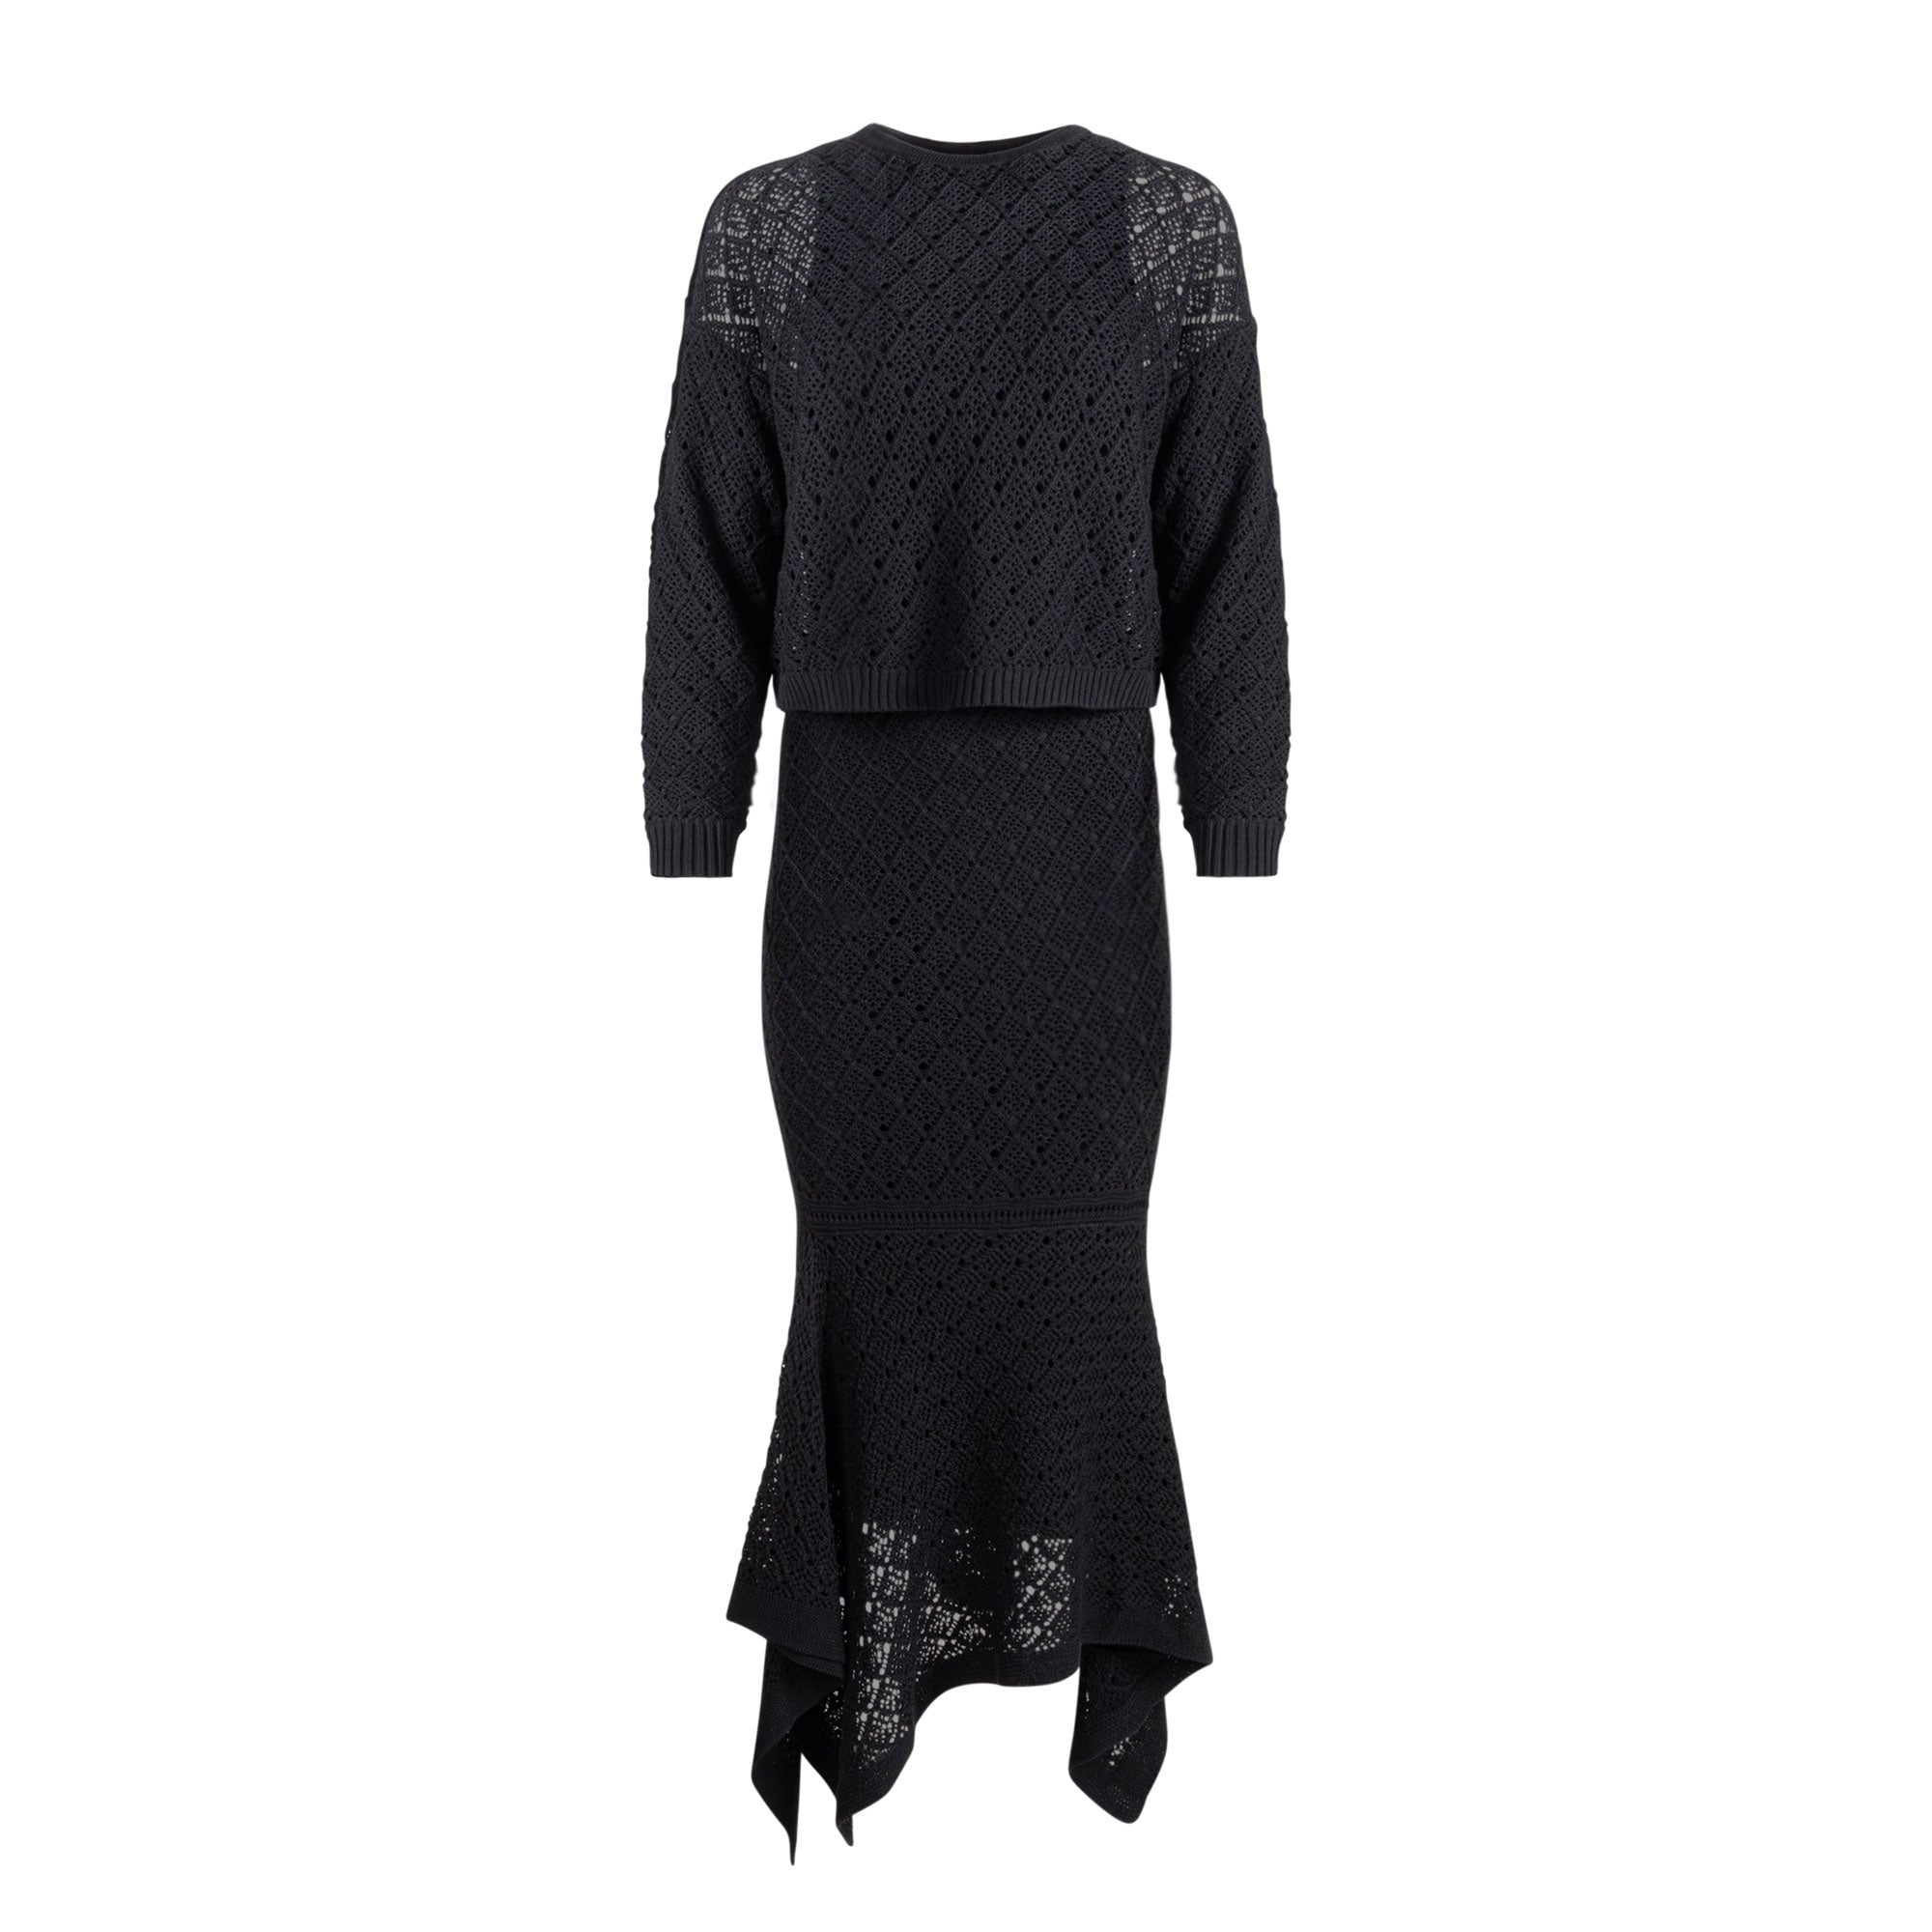 Crochet Dress with Top - Black